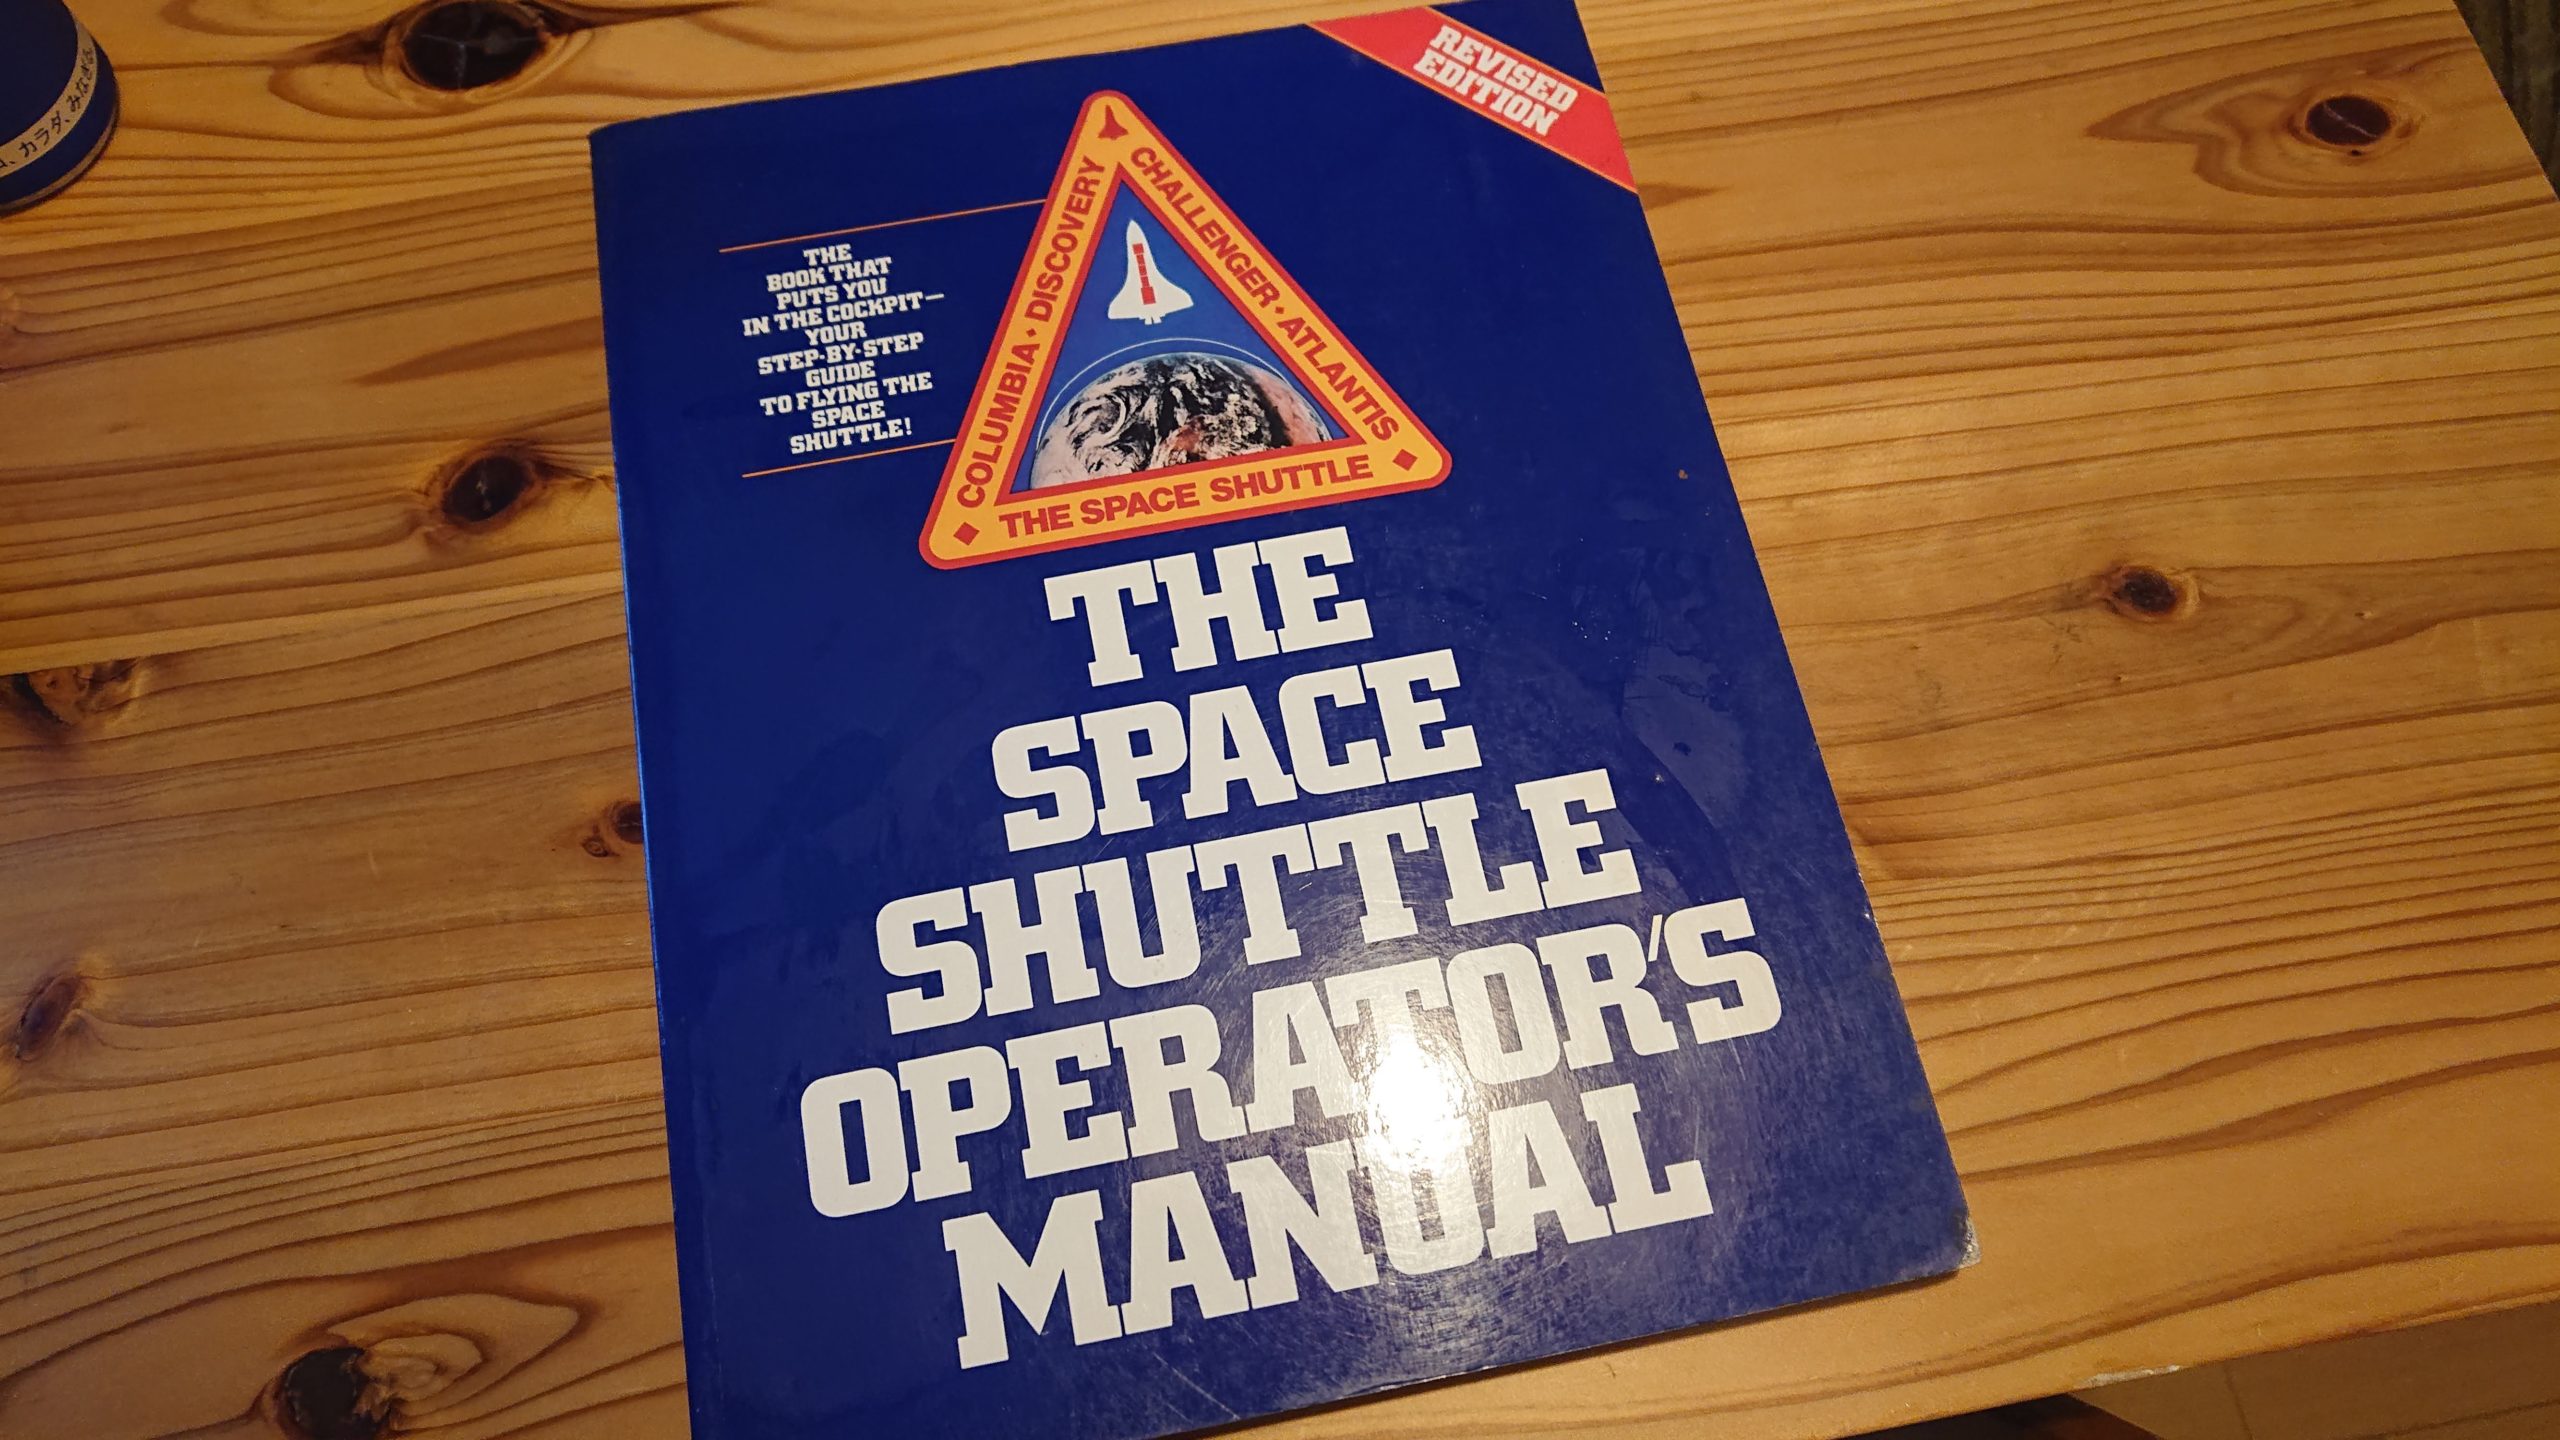 THE SPACE SHUTTLE OPERATOR MANUAL|スペースシャトルオペレータマニュアル